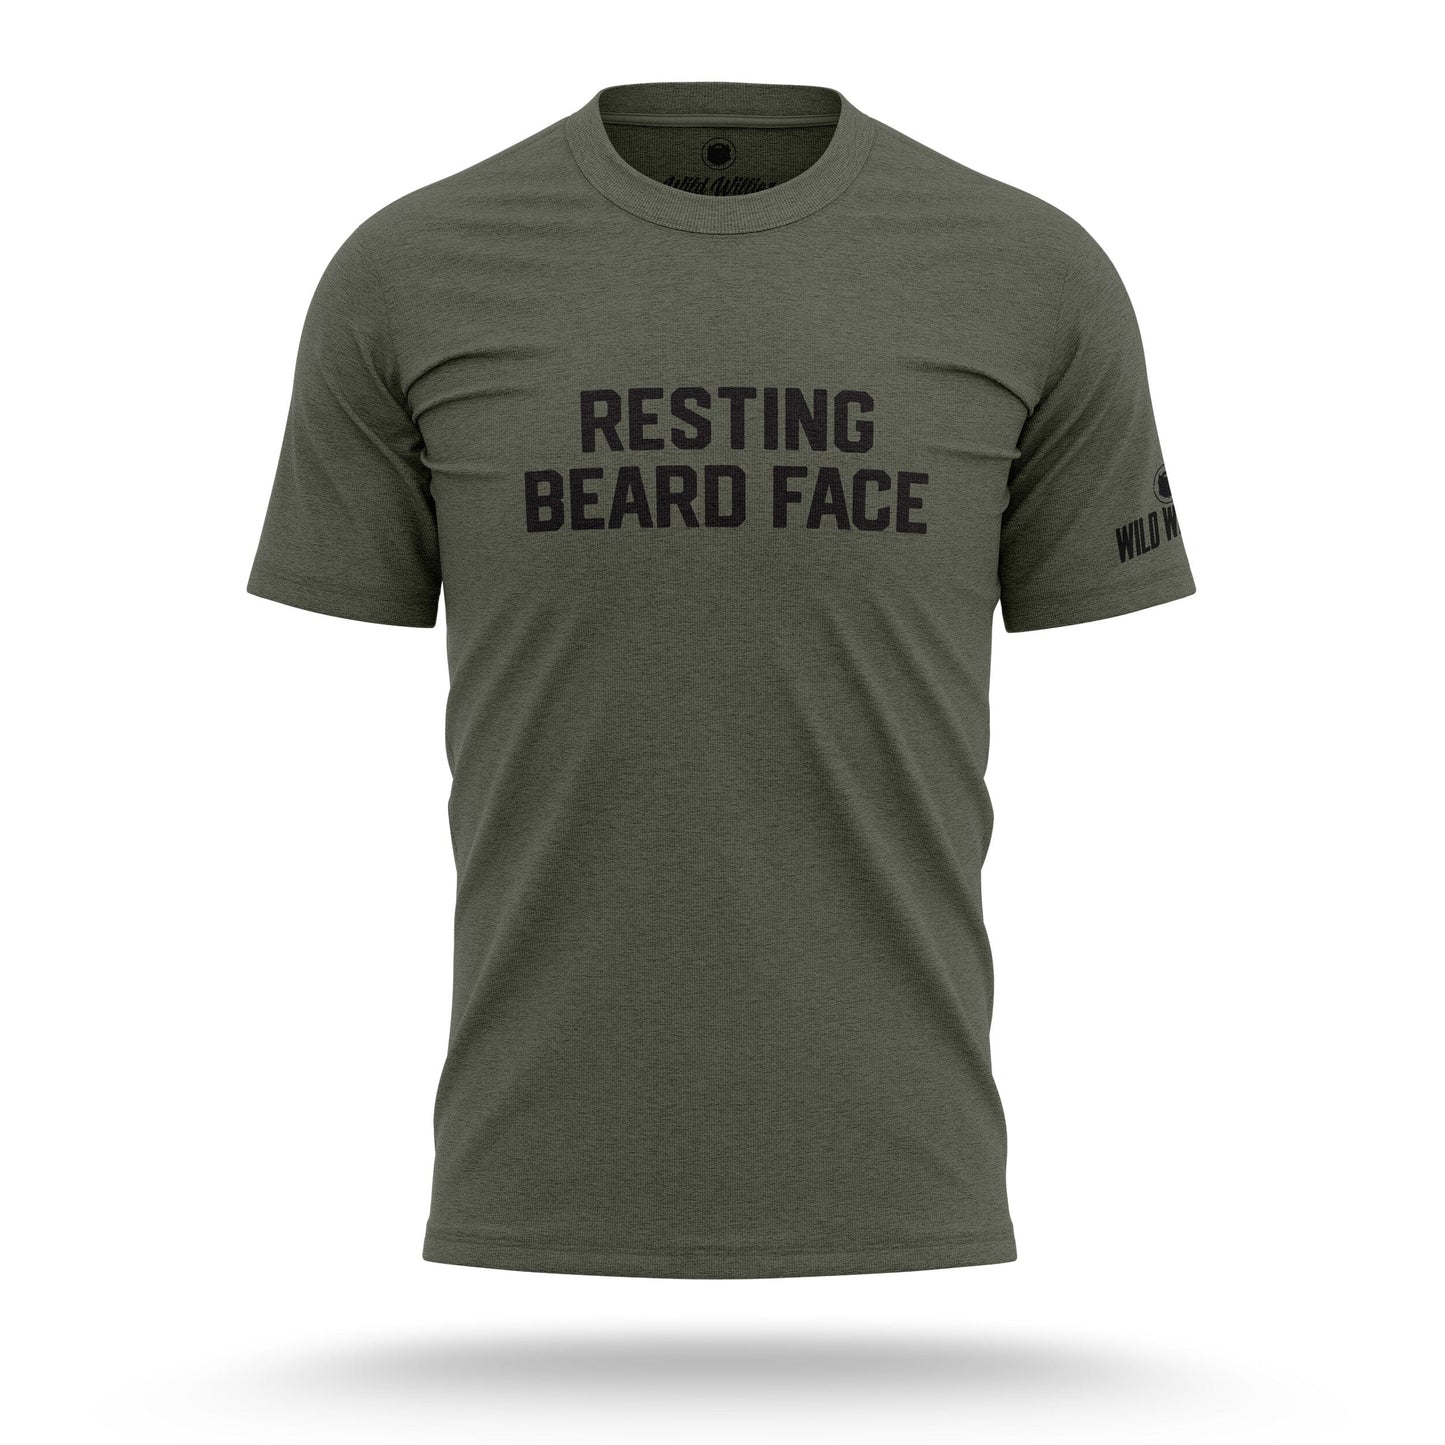 Resting Beard Face - T-Shirt T-Shirt Wild-Willies S Stone Gray 